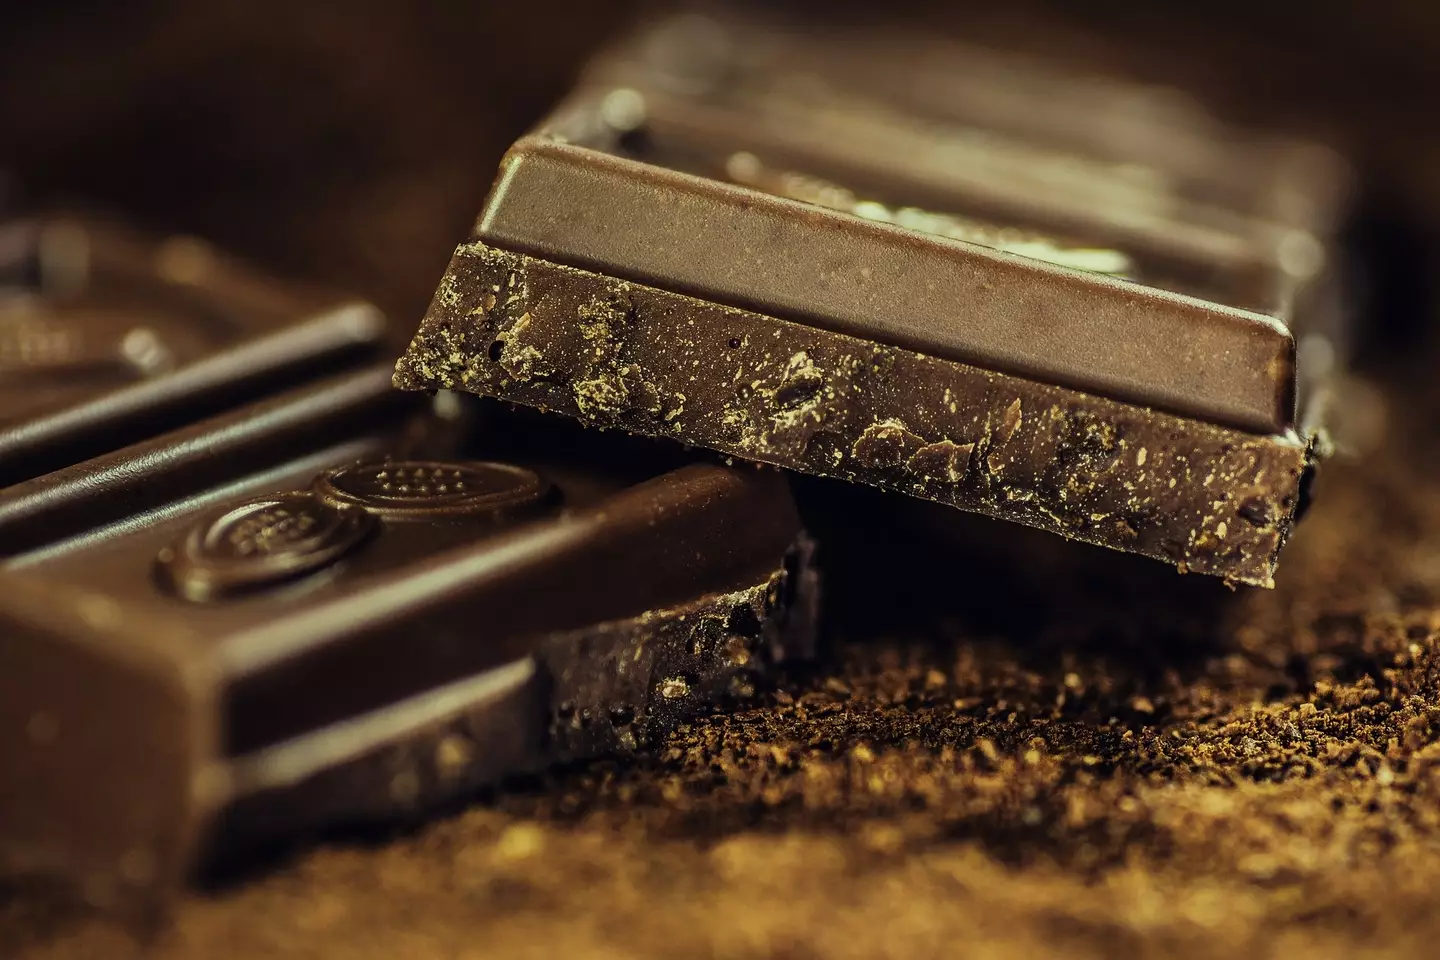 Dark chocolate may pose a health risk.